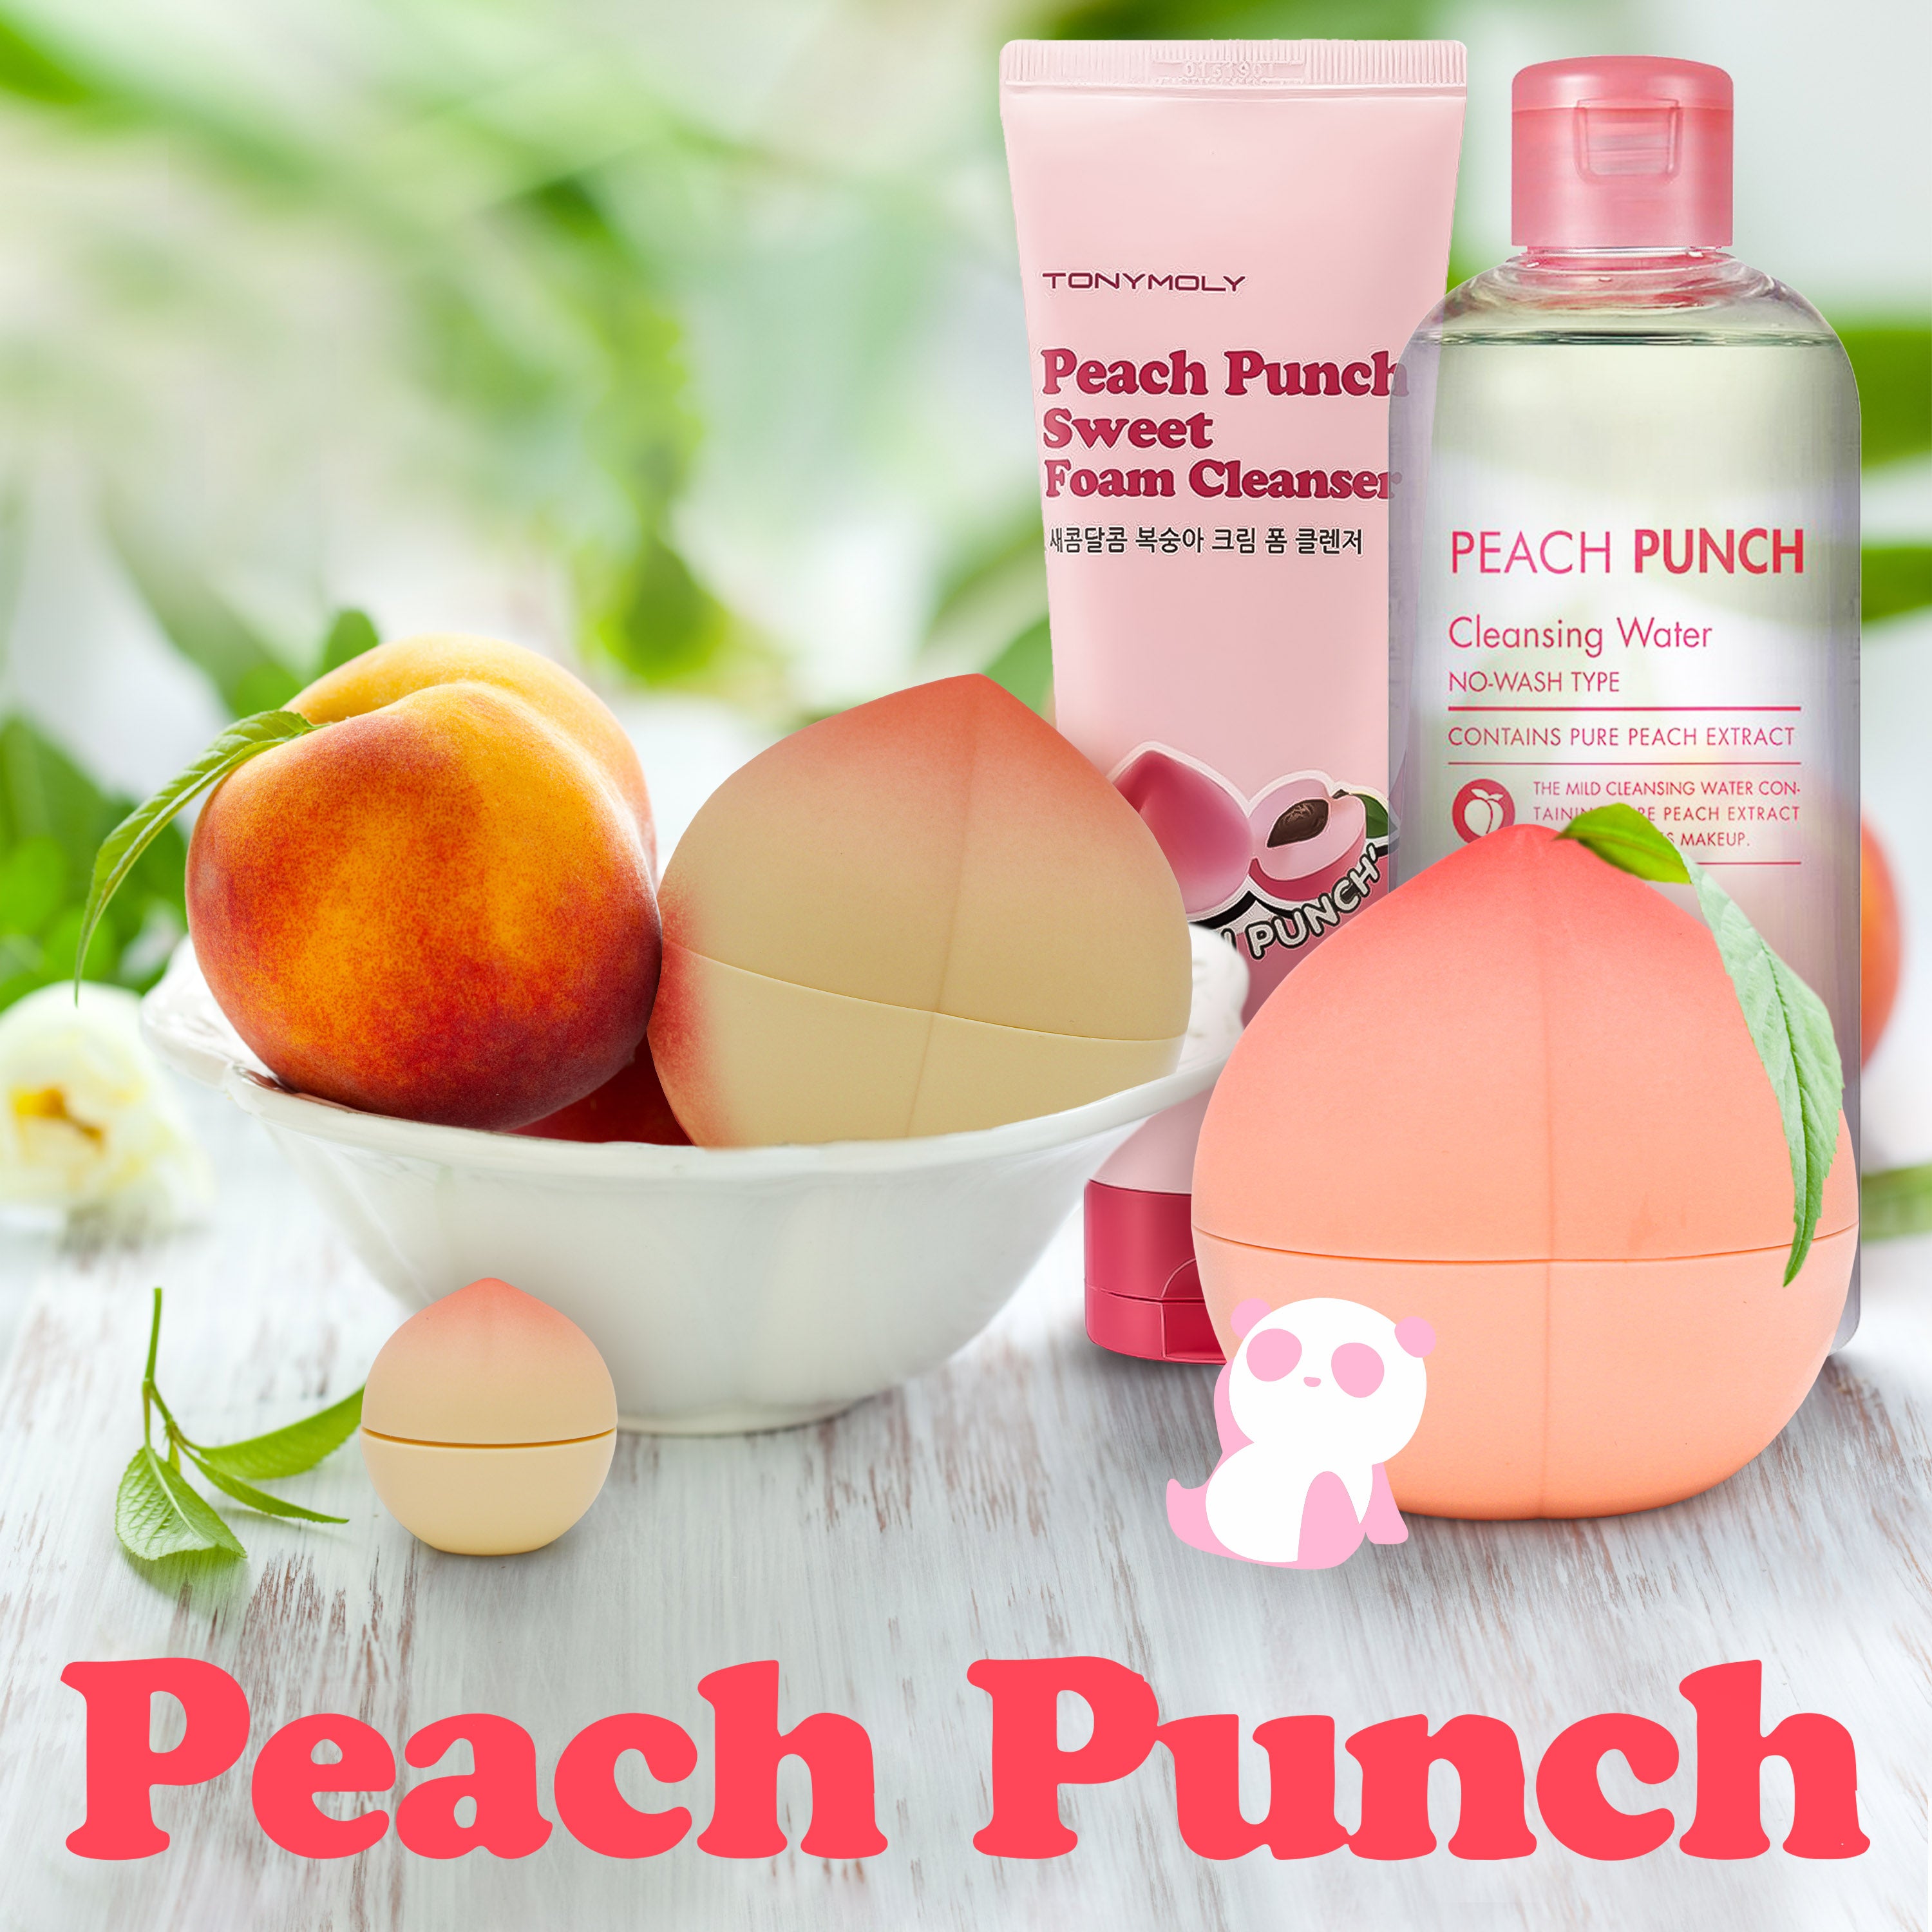 TONYMOLY Peach Punch Sherbet Cleansing Balm 80g | Korean Skin Care